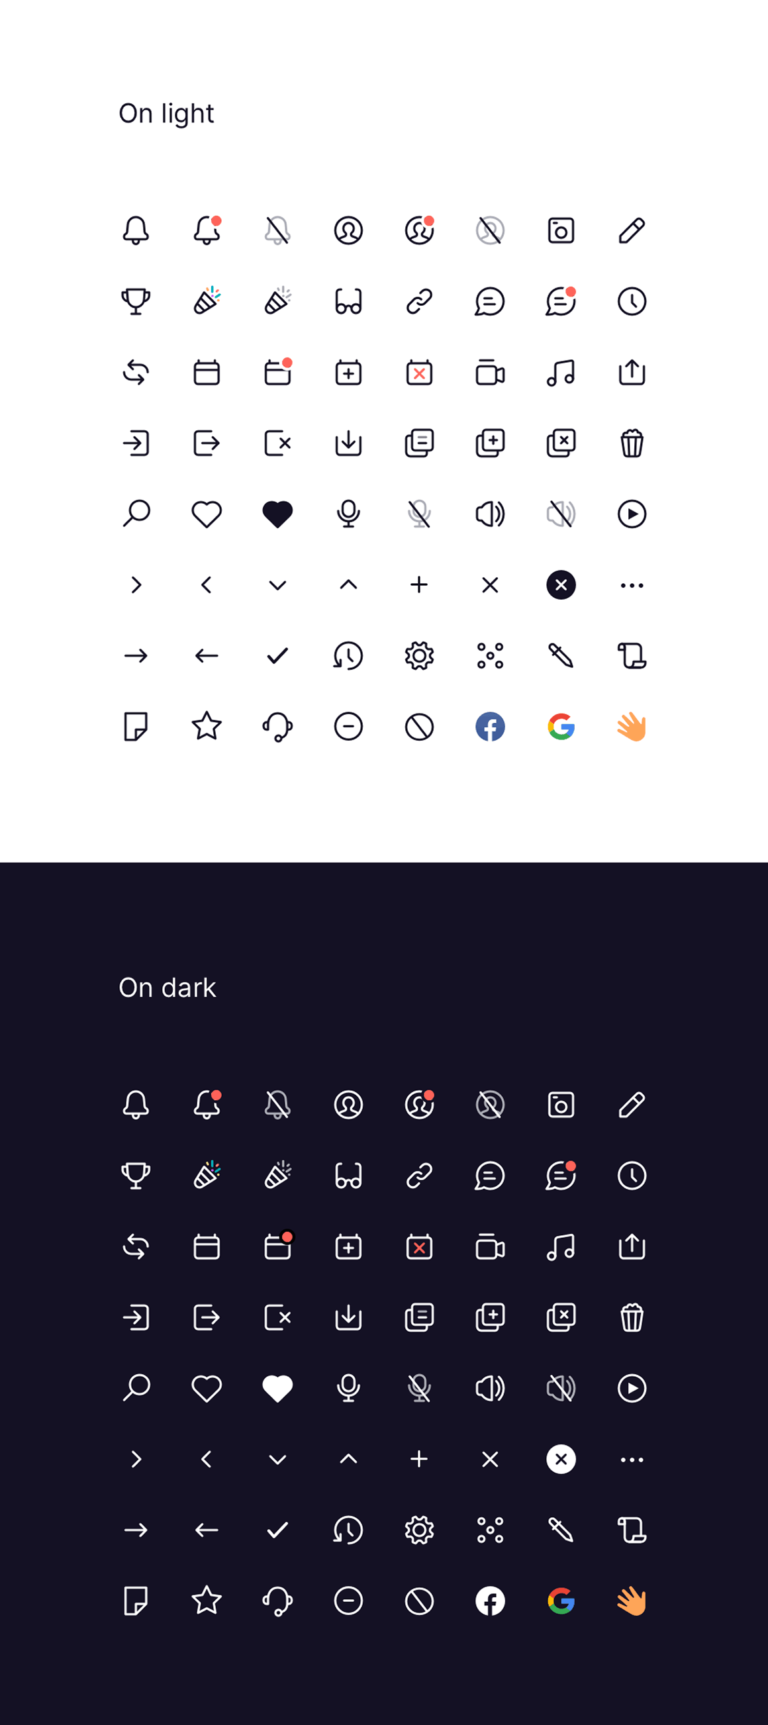 128 Free vector icons for UI design - Freebiesbug